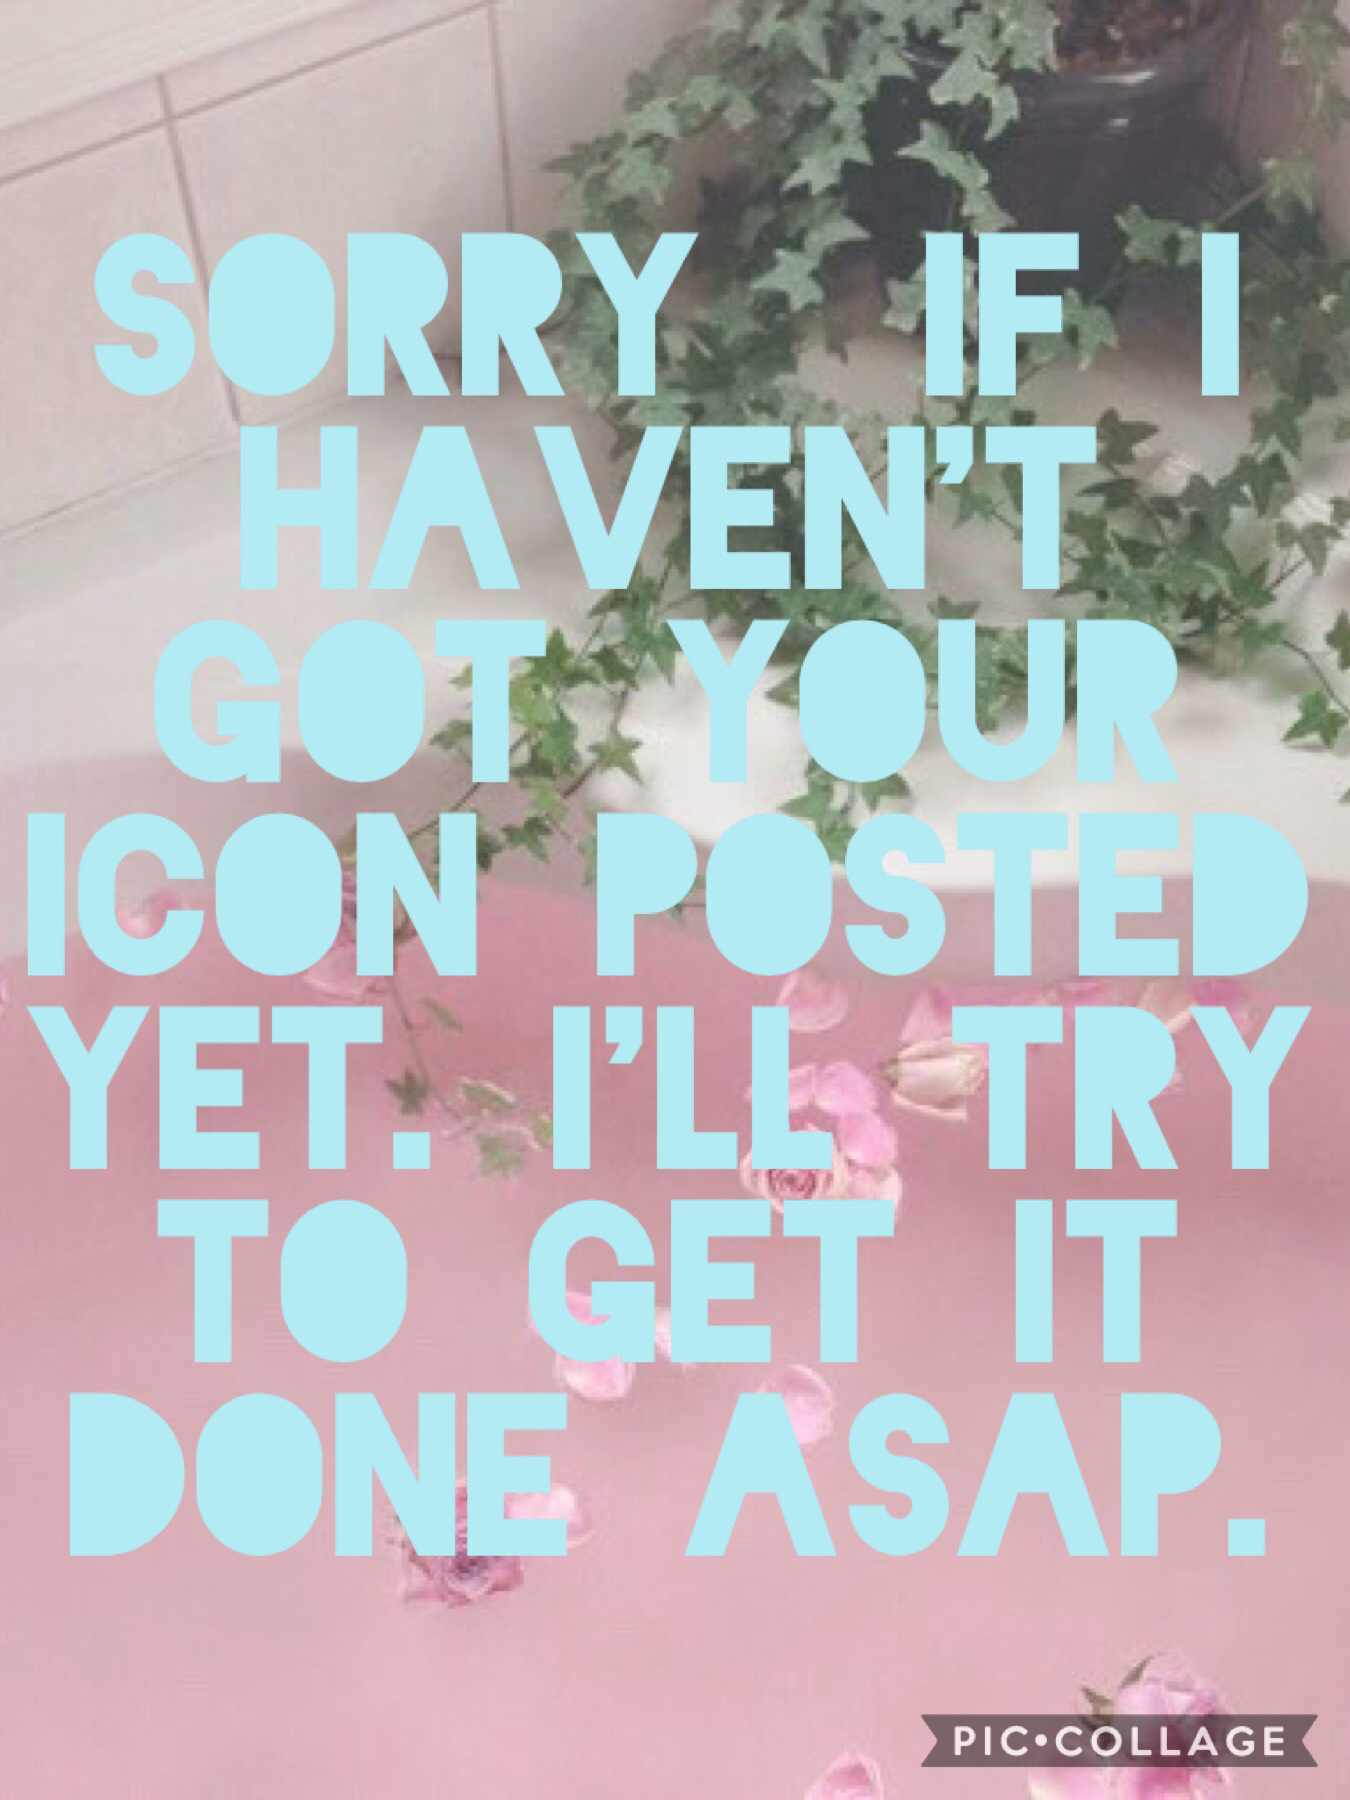 So sorry 😰